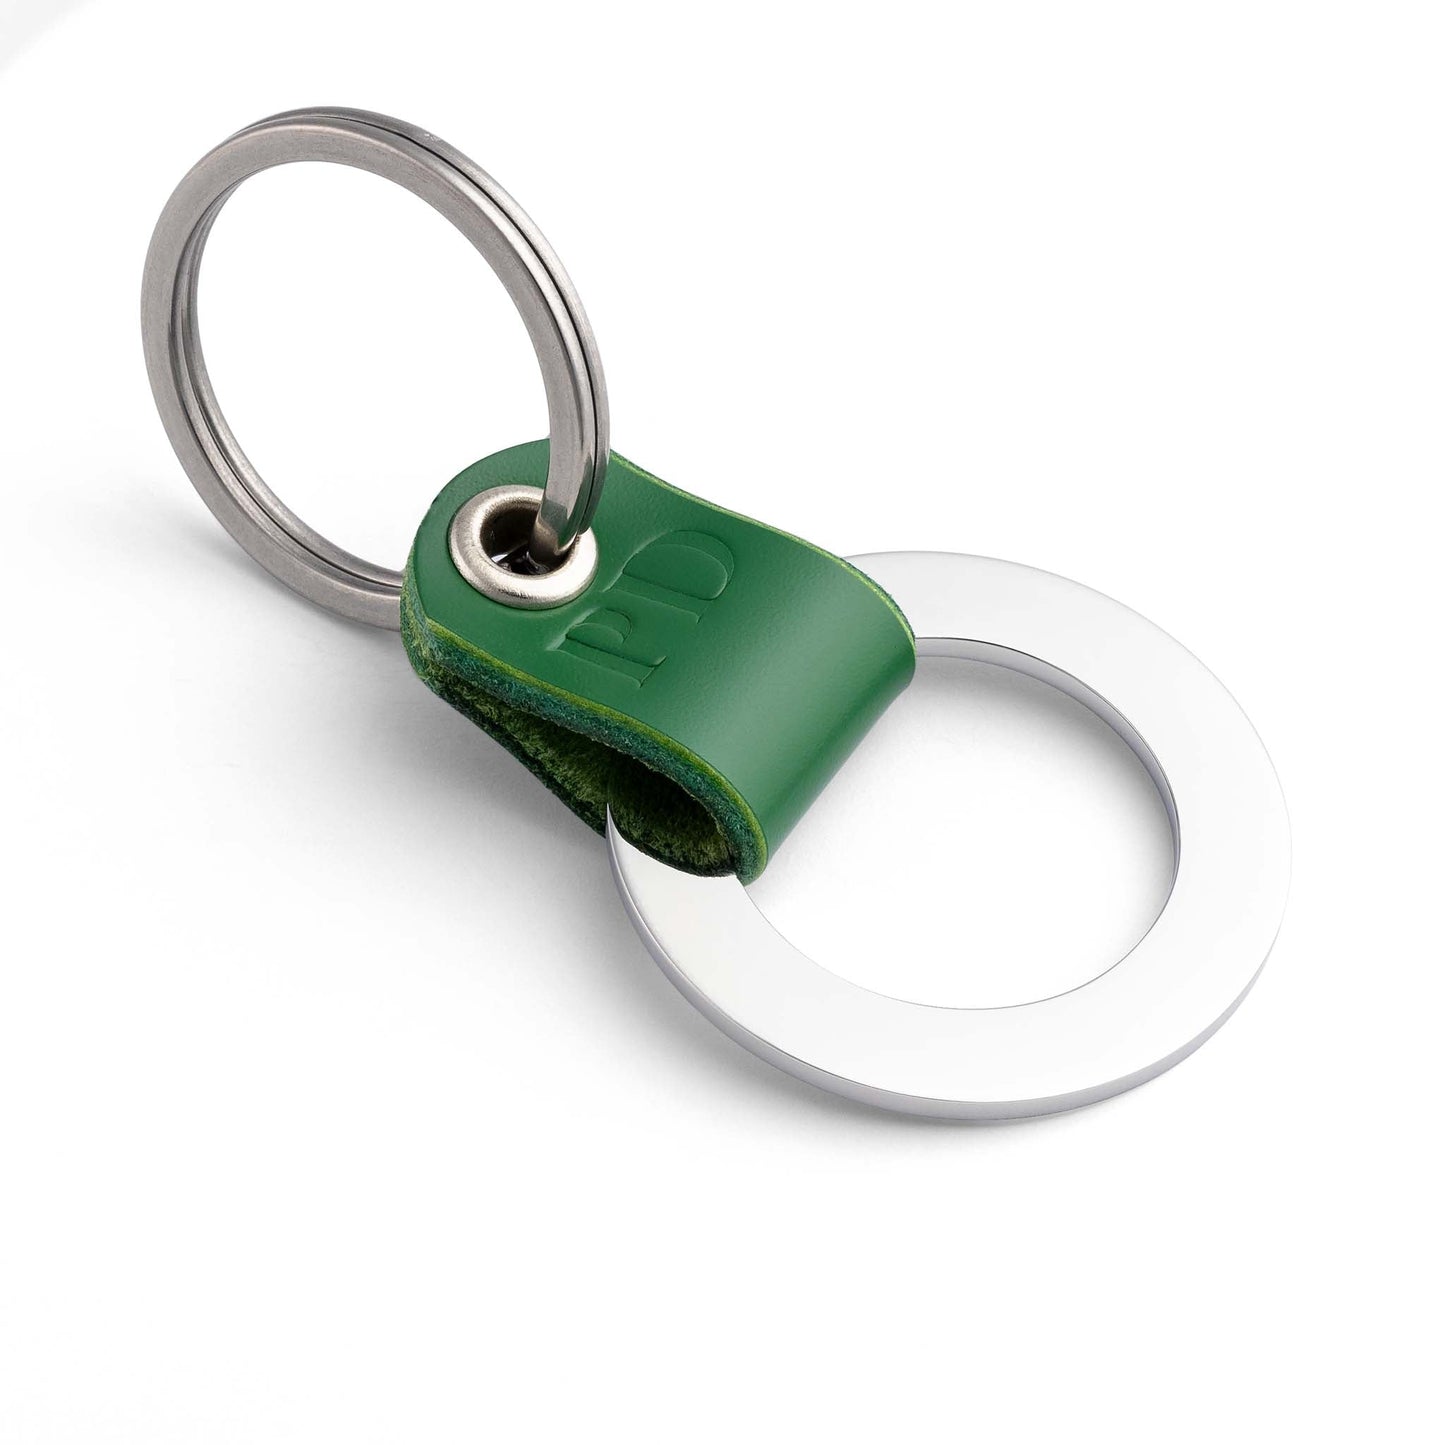 Schlüsselanhänger aus grün leder - seQua.Shop